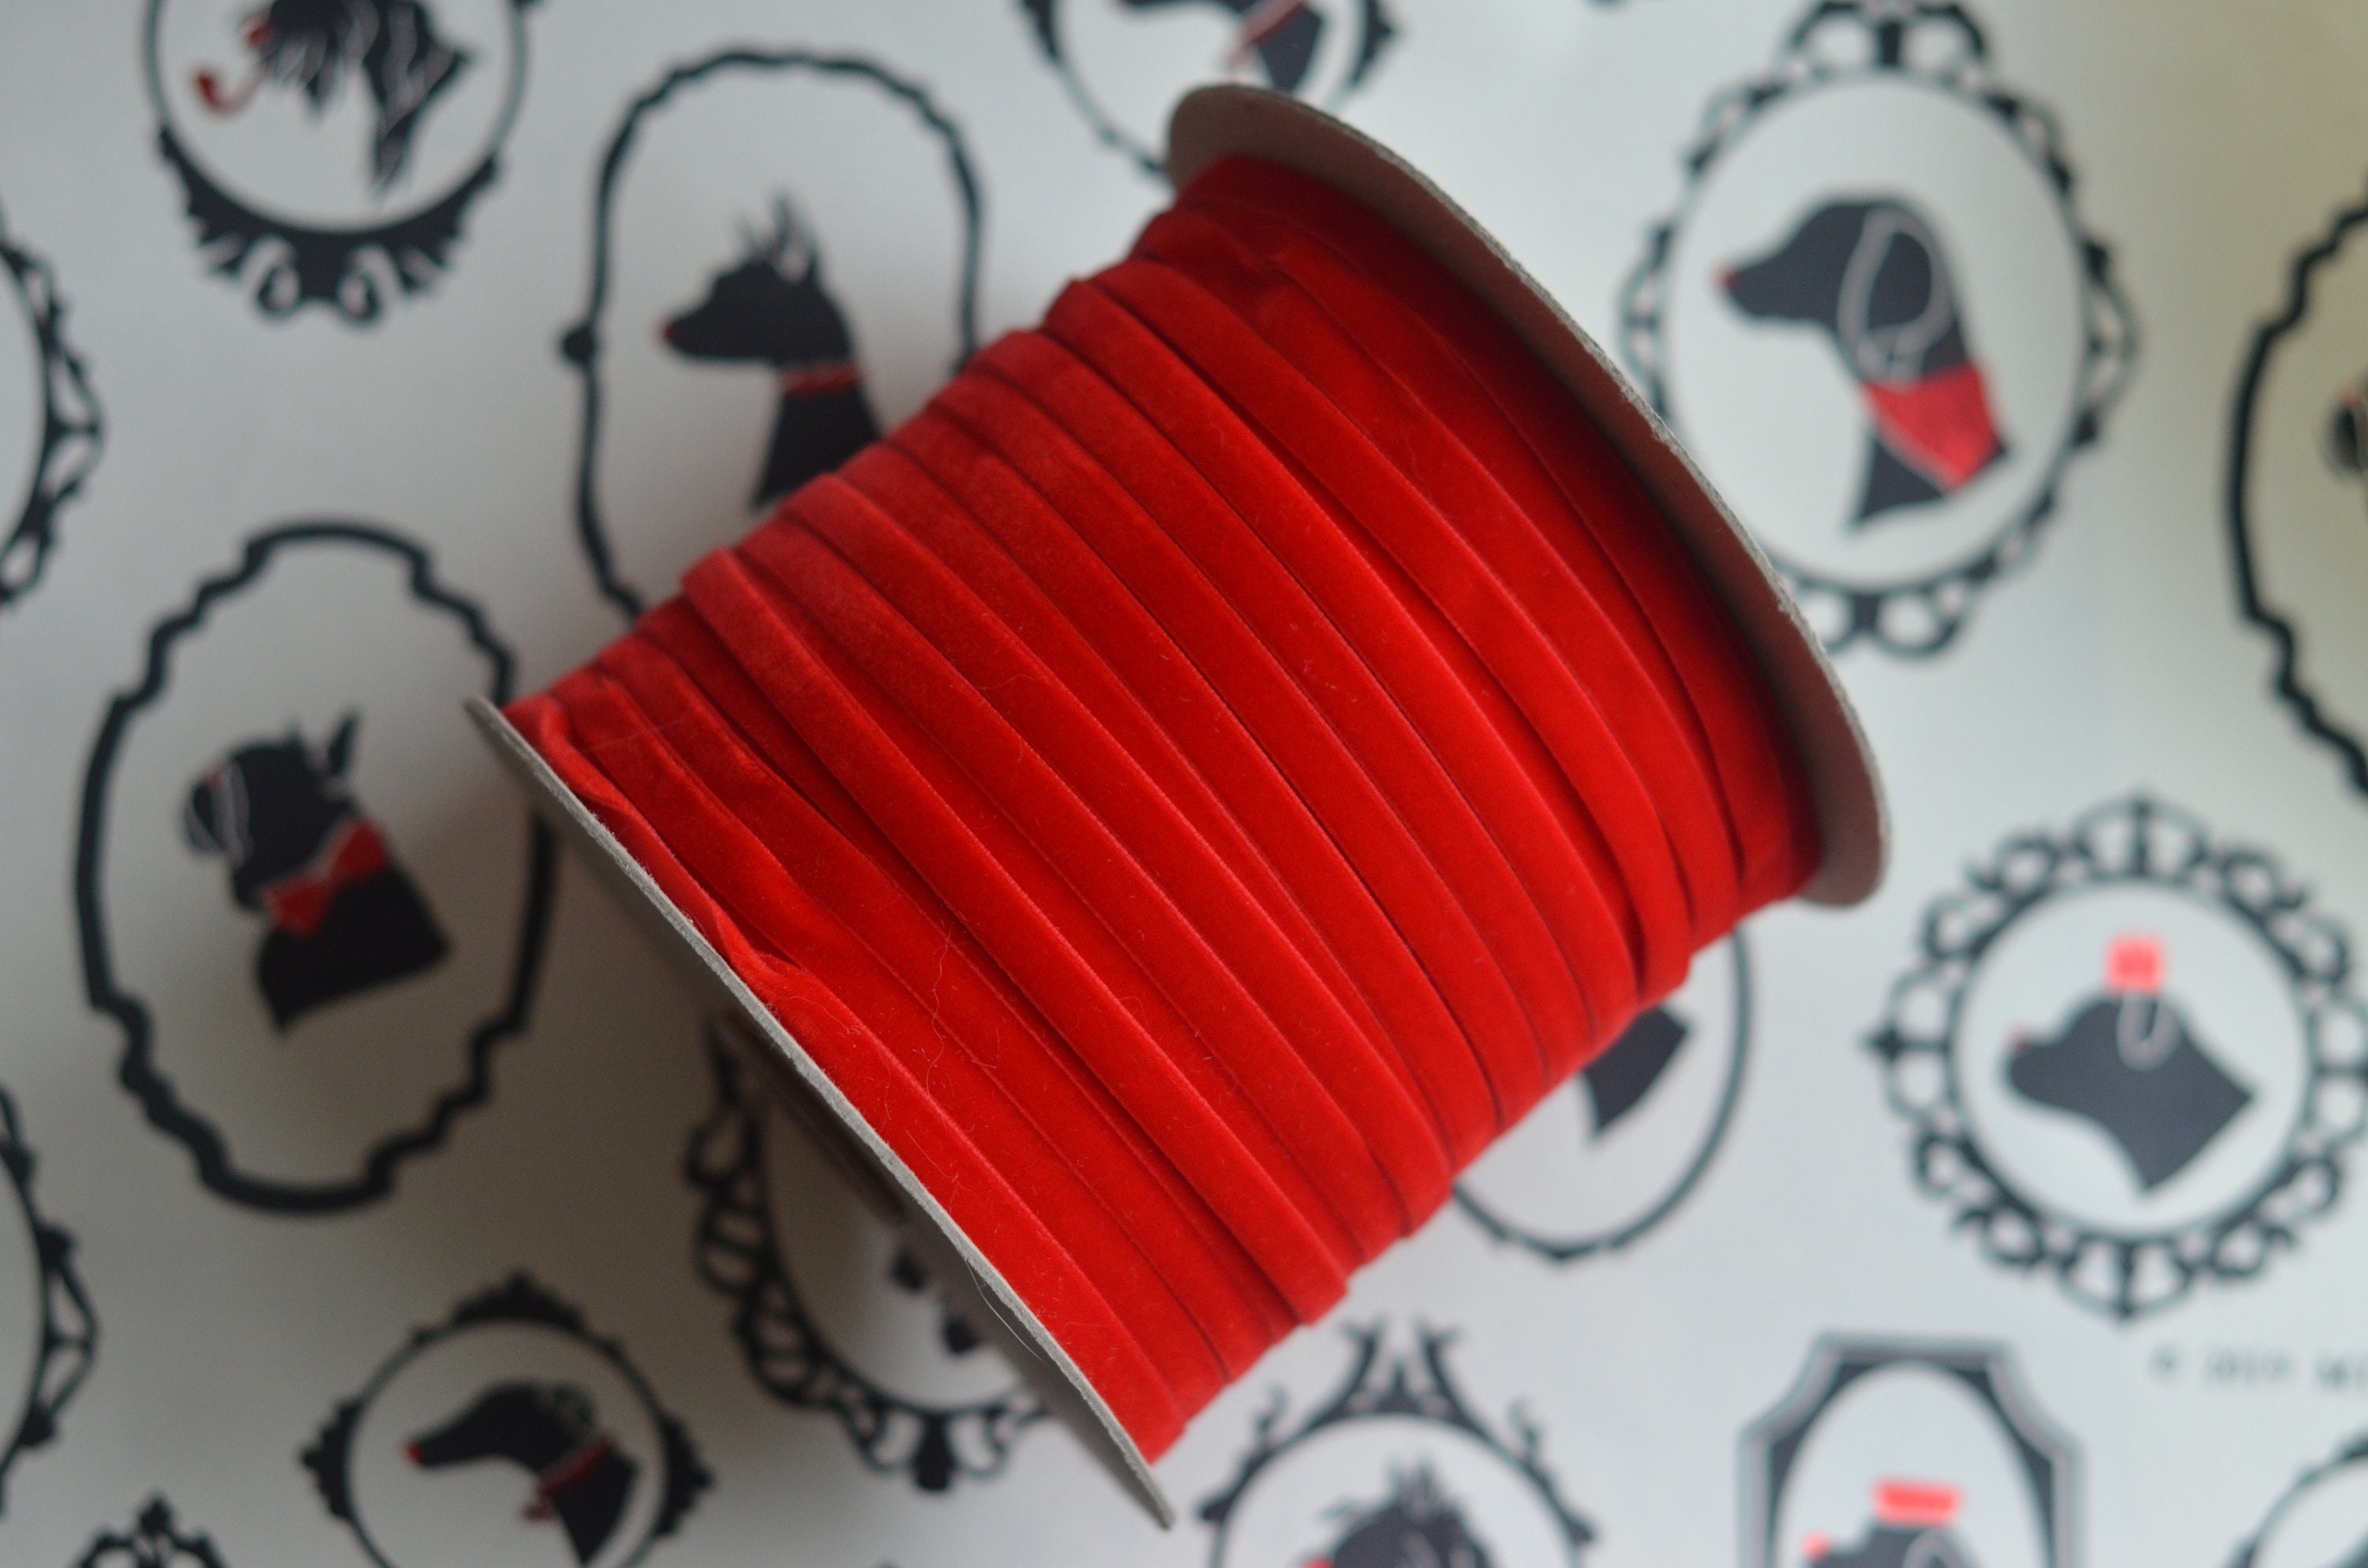 Red Ribbon Bookmark  3 ribbons – OCTÀGON DESIGN